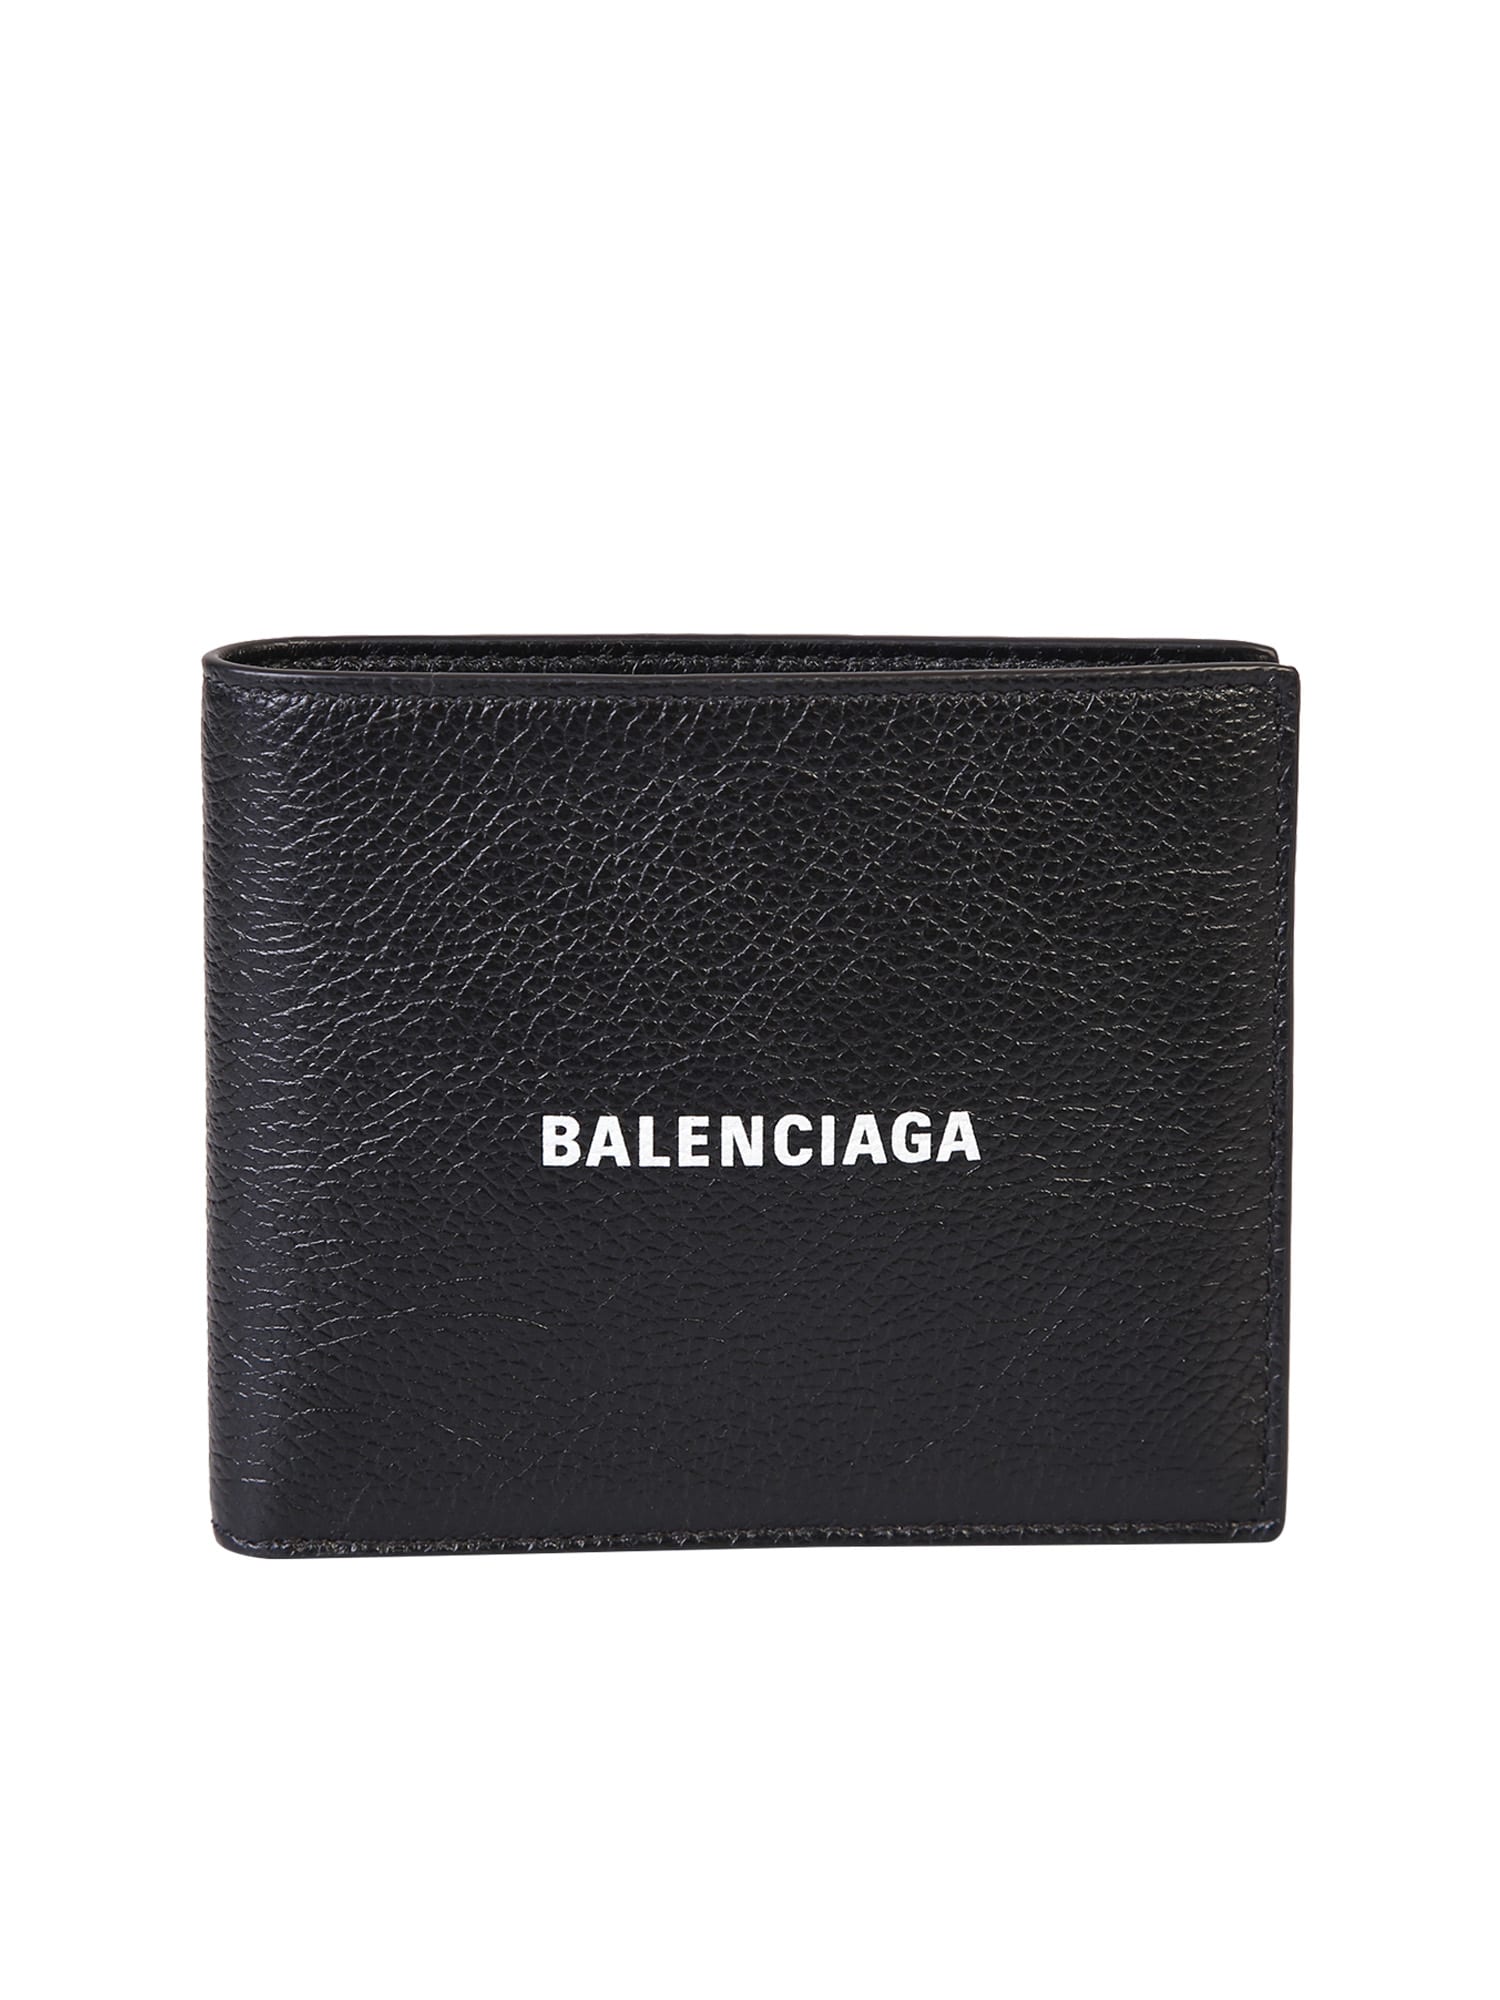 Balenciaga Grained Texture Black Wallet